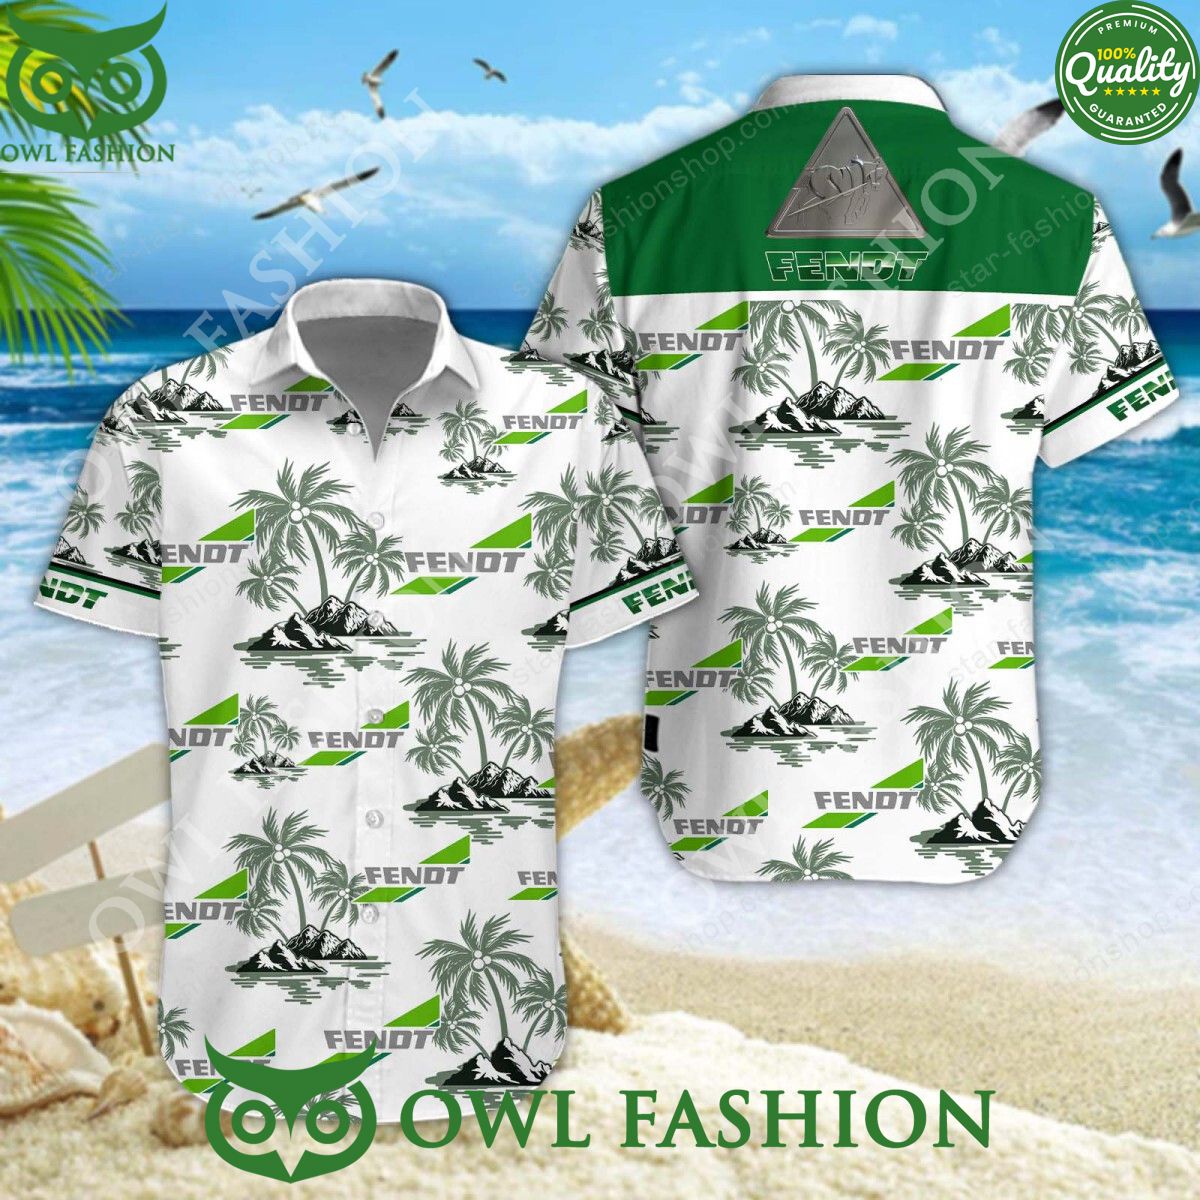 fendt german agricultural machinery manufacturer hawaiian shirt and short 1 Oa6MT.jpg